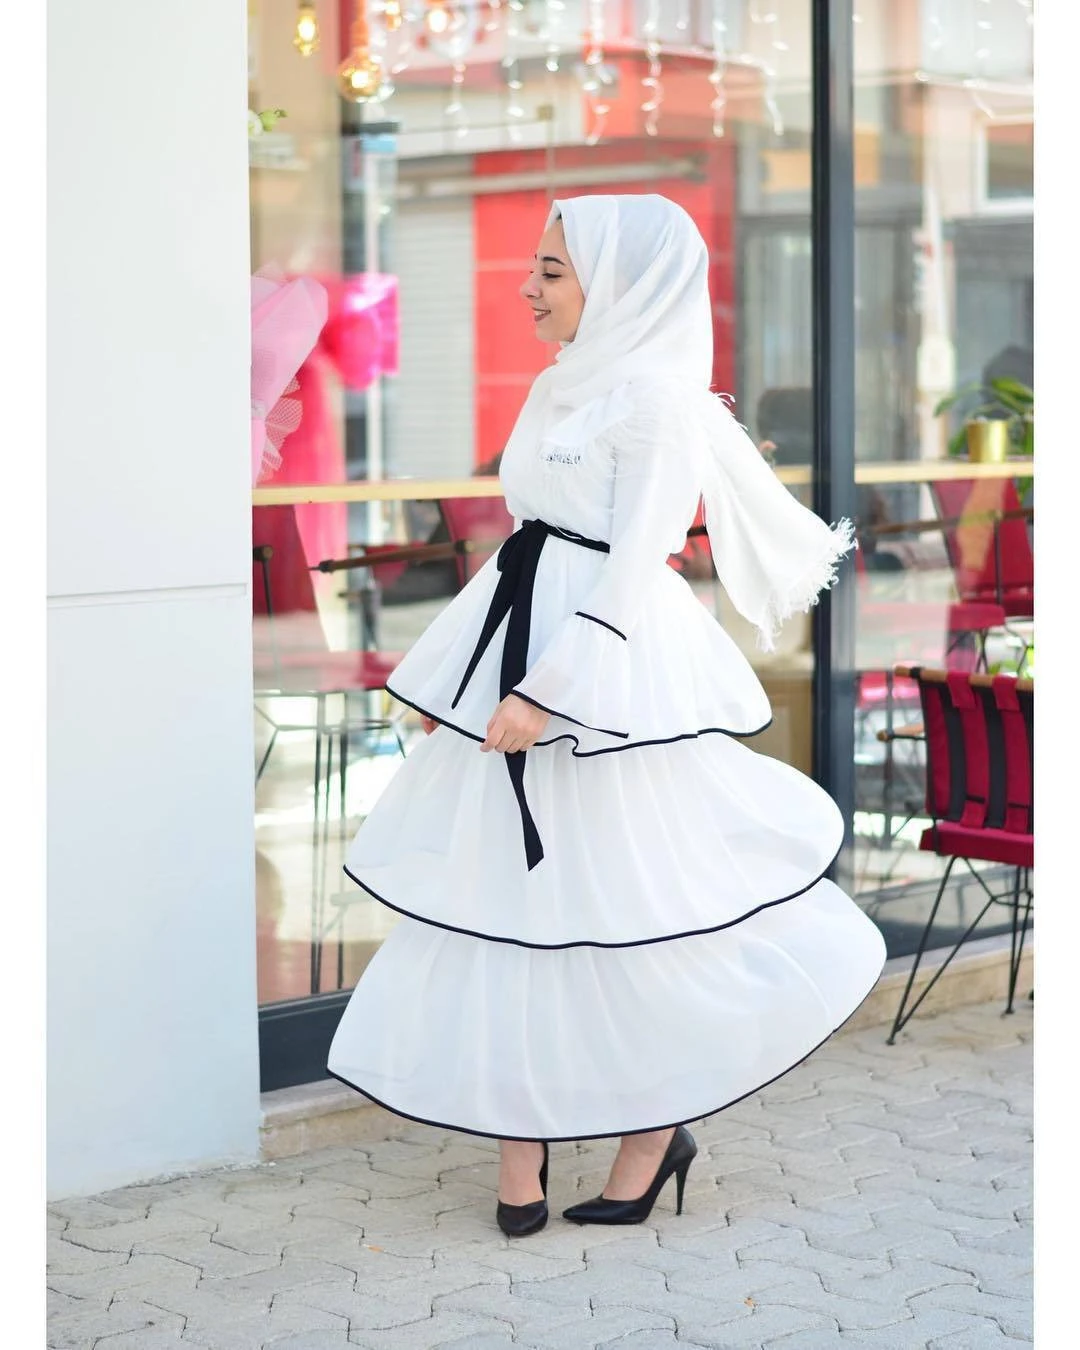 33 Best Muslim Fashion & Dress Styles For Muslim Women (7) | Muslim fashion,  Muslim fashion hijab outfits, Fashion